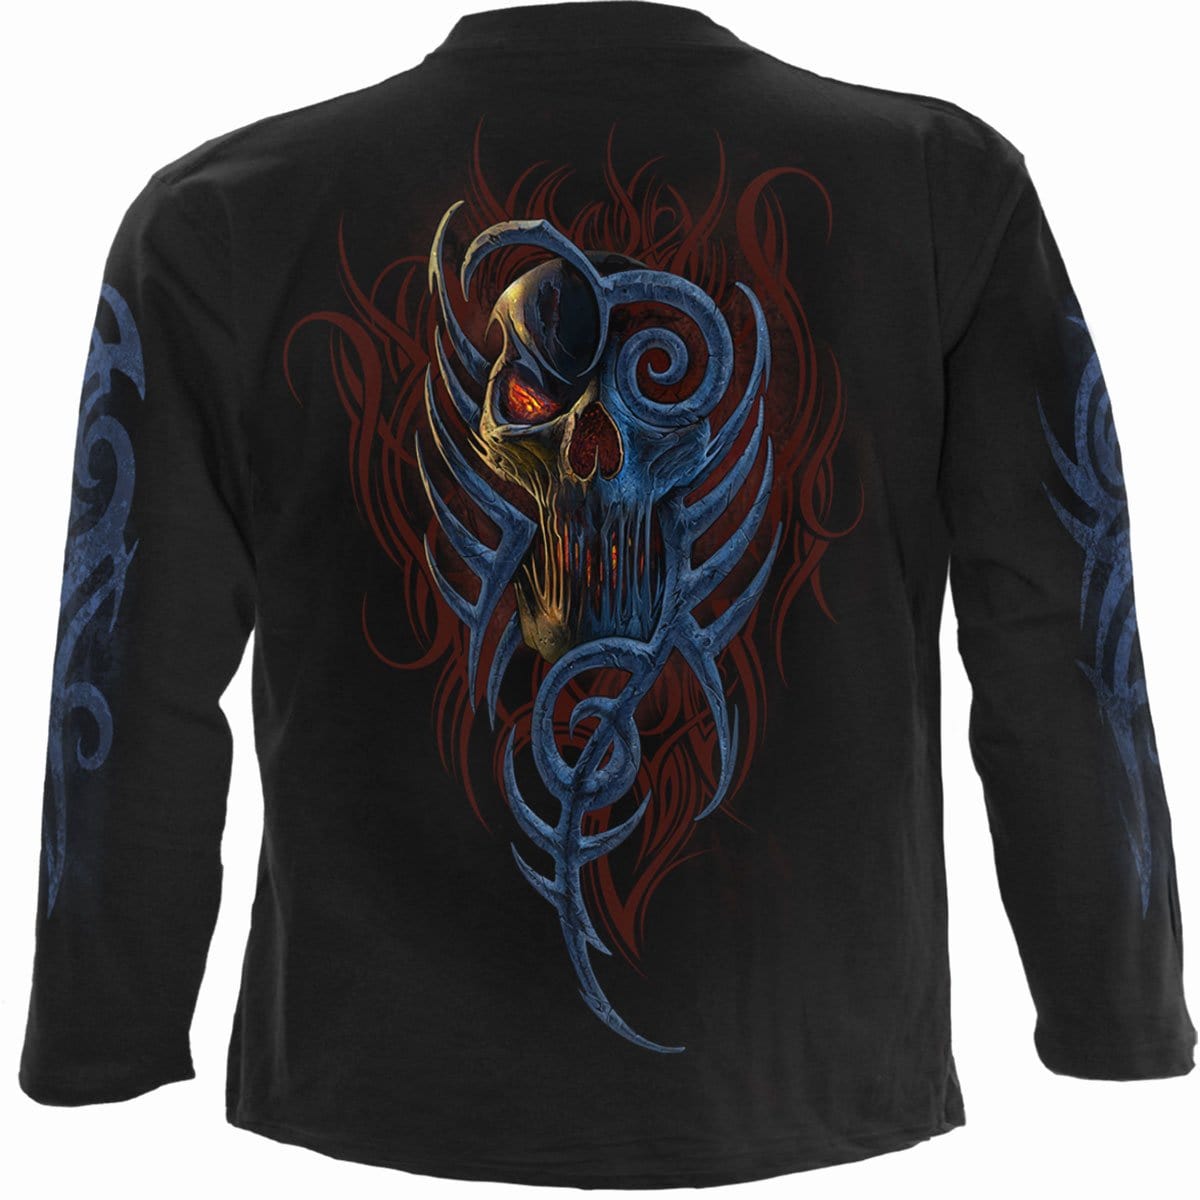 OBLIVION - Longsleeve T-Shirt Black - Spiral USA